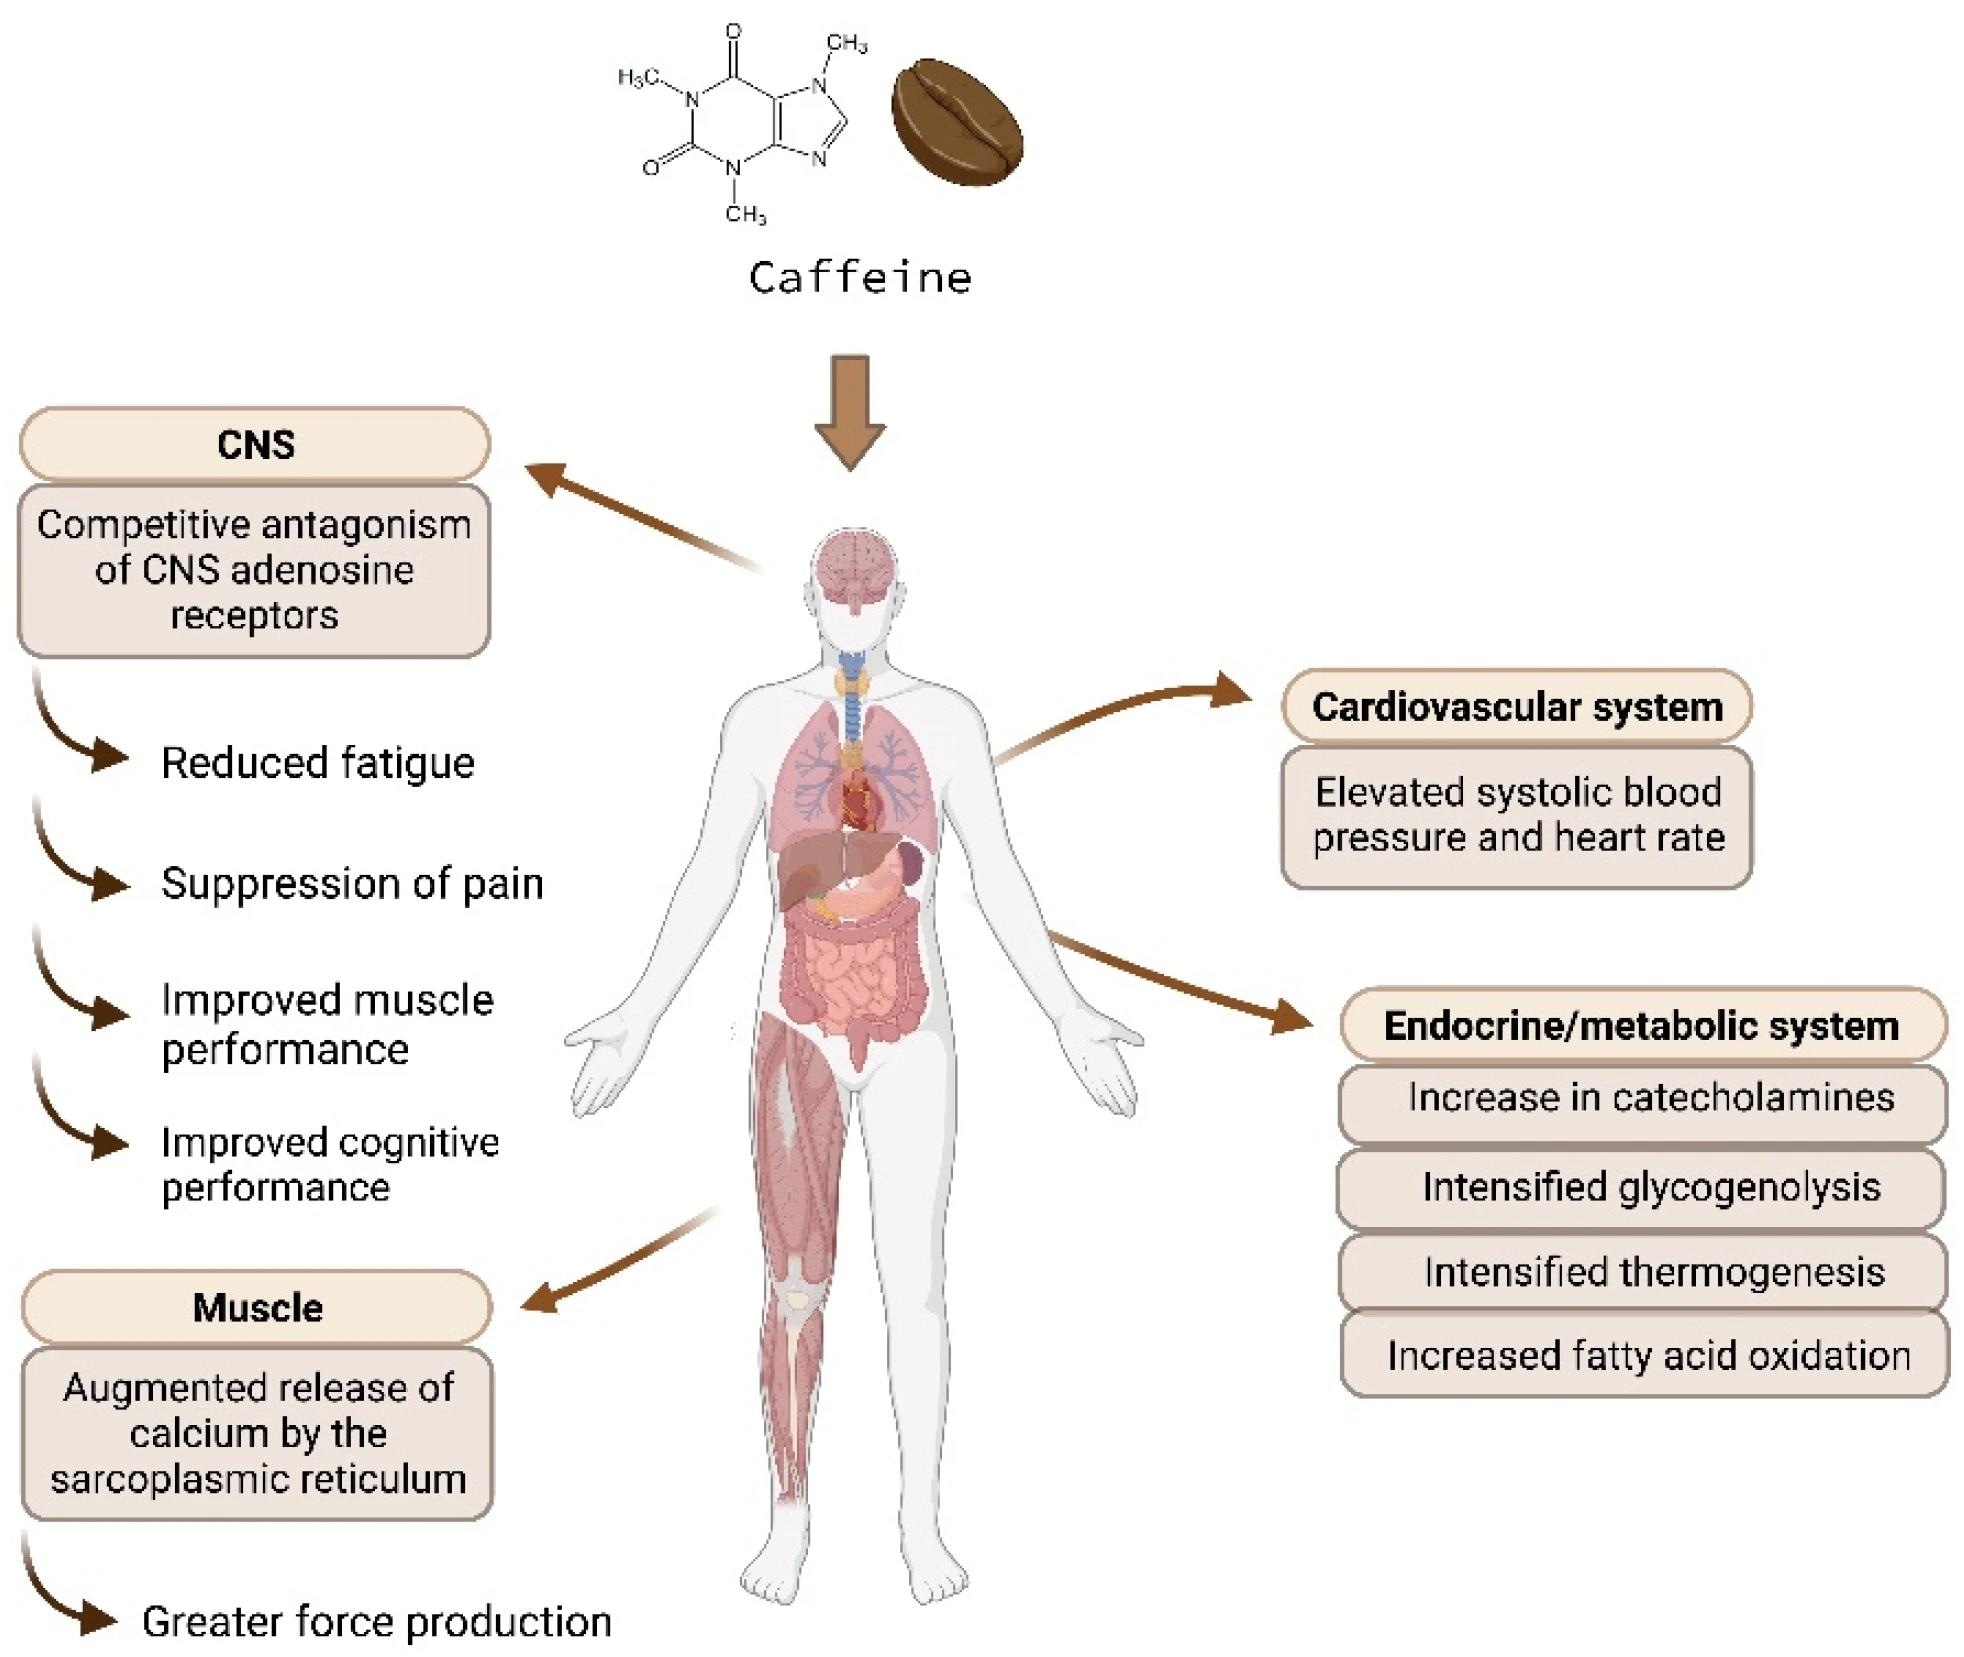 Caffeine metabolism boost